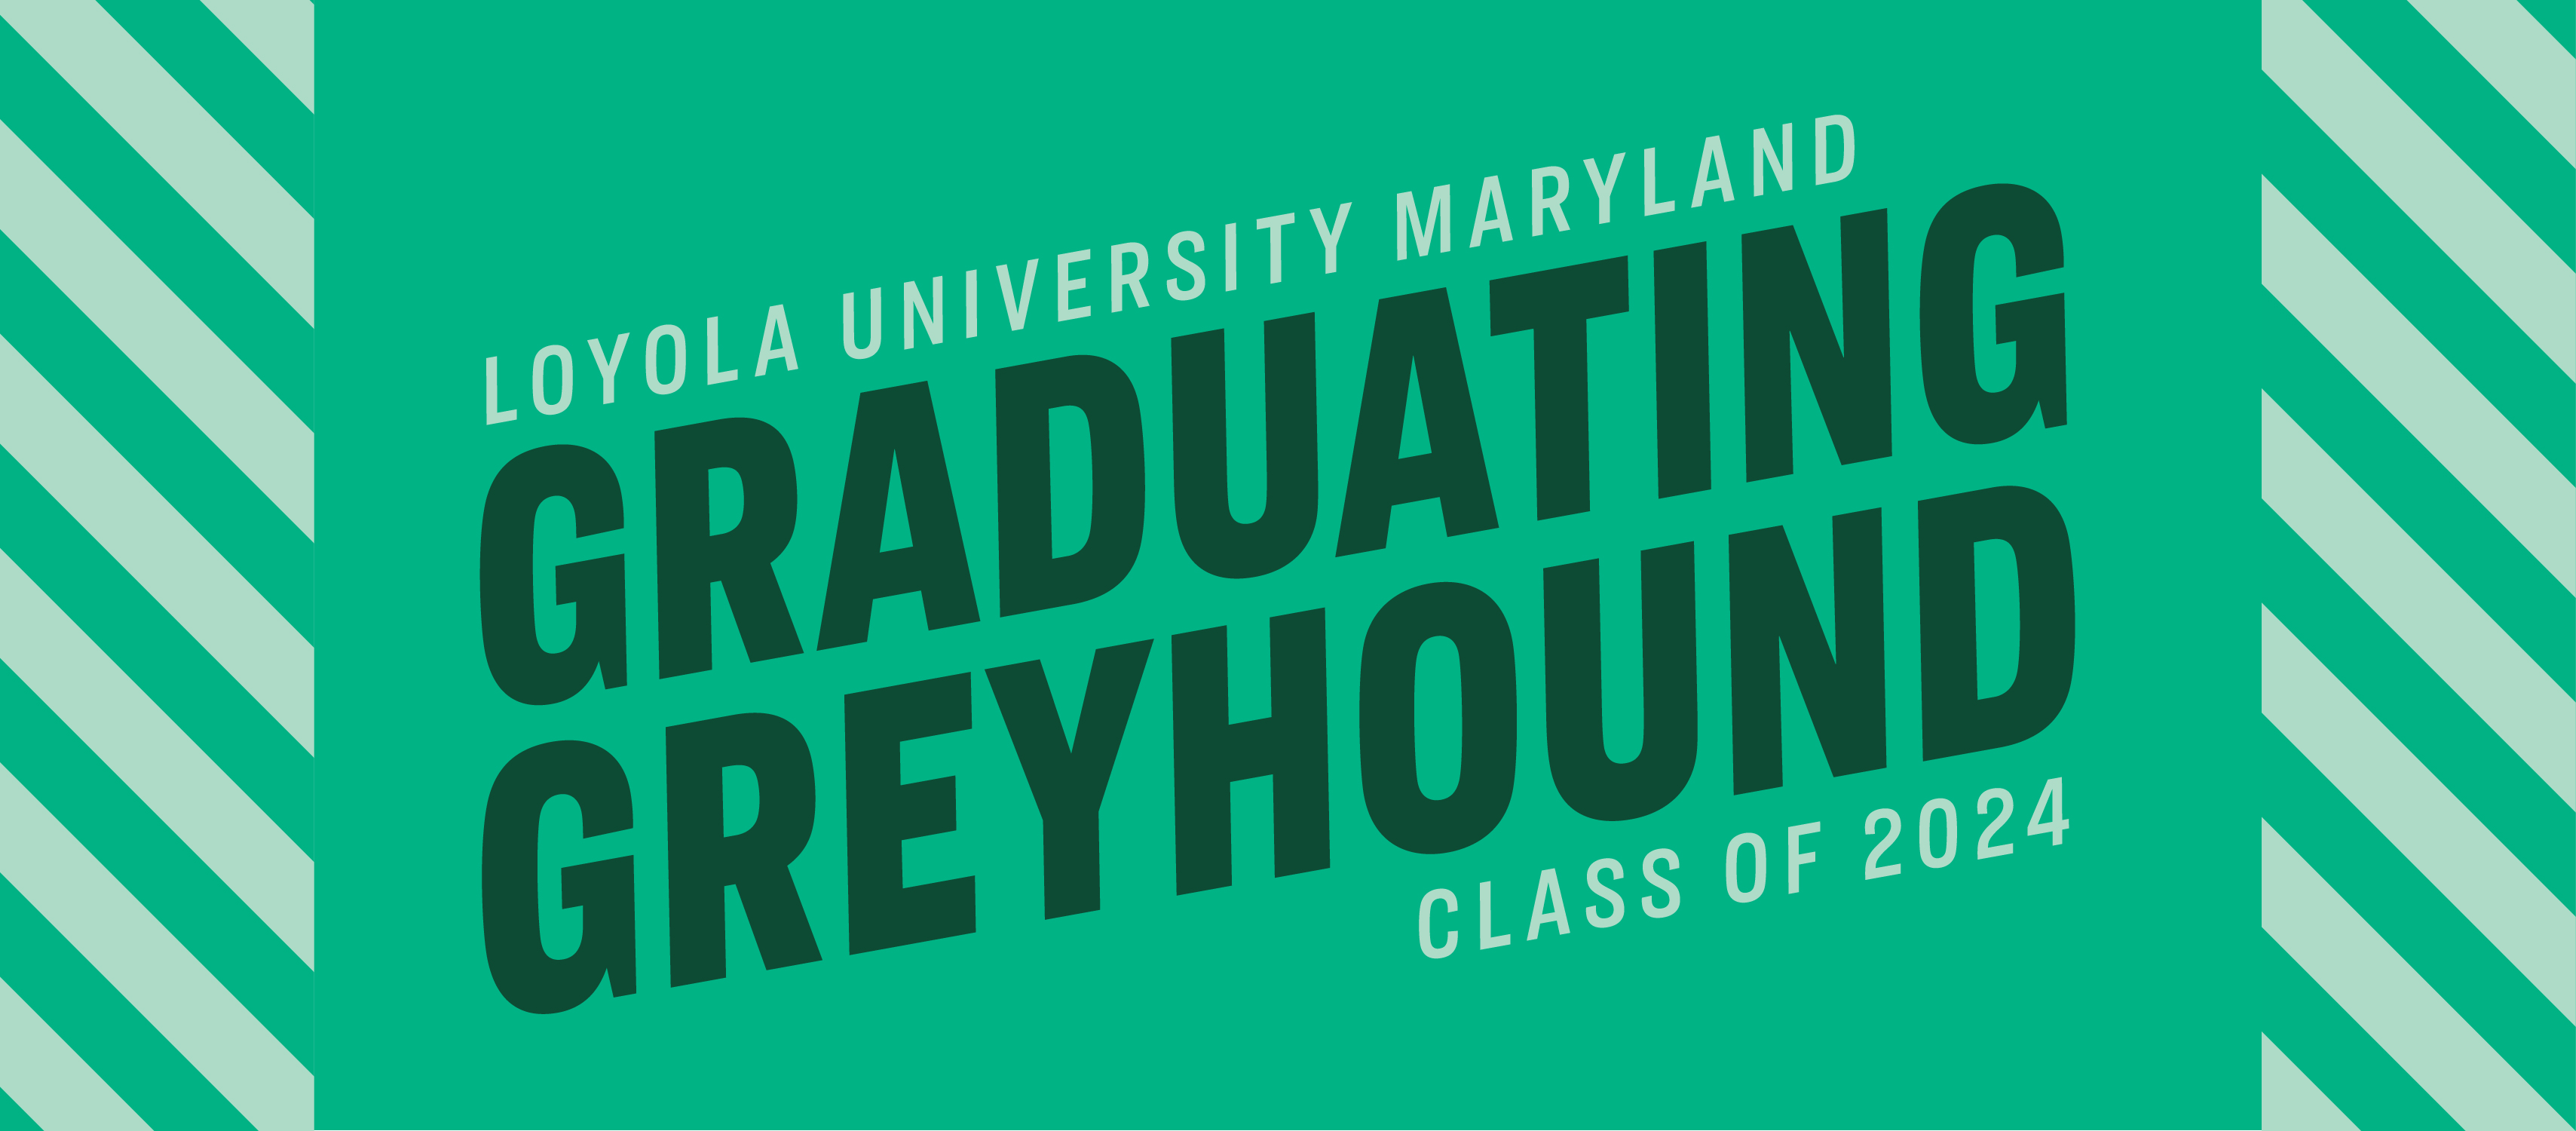 Facebook Cover: Loyola University Maryland Graduating Greyhound Class of 2024